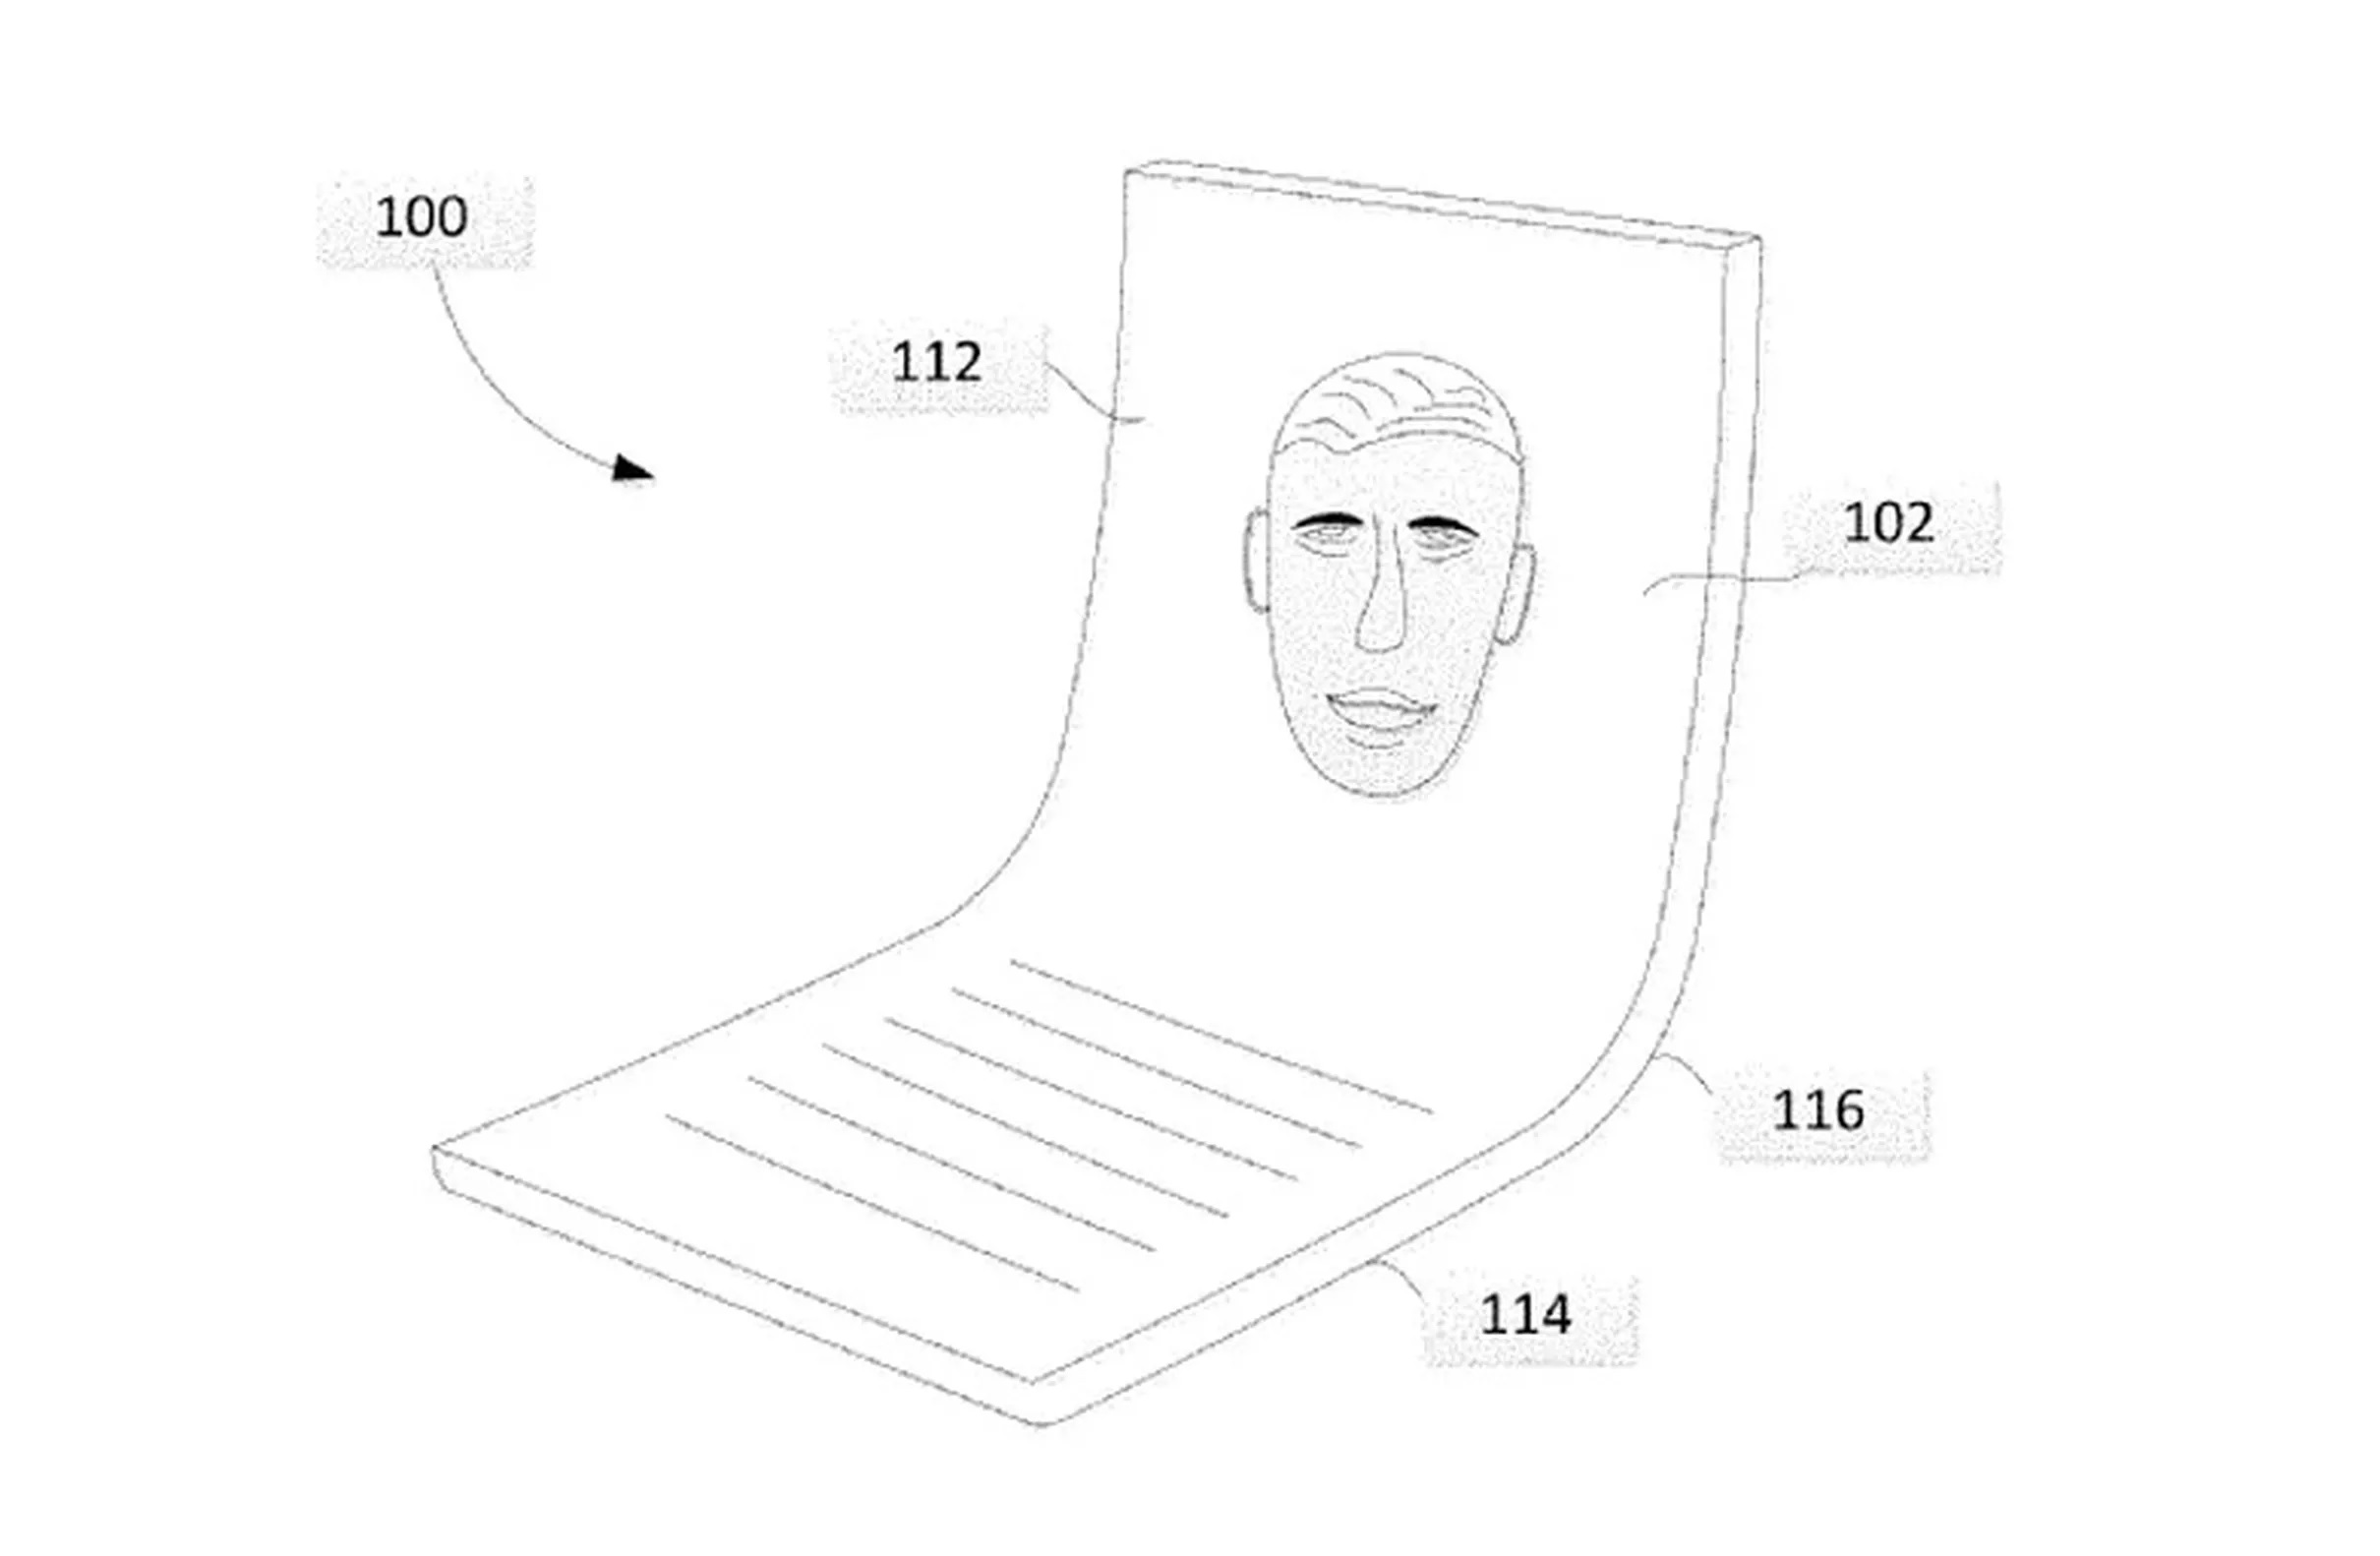 Google折叠设备专利显示了一部直立的折叠手机，并带有显示屏上的脸部图。